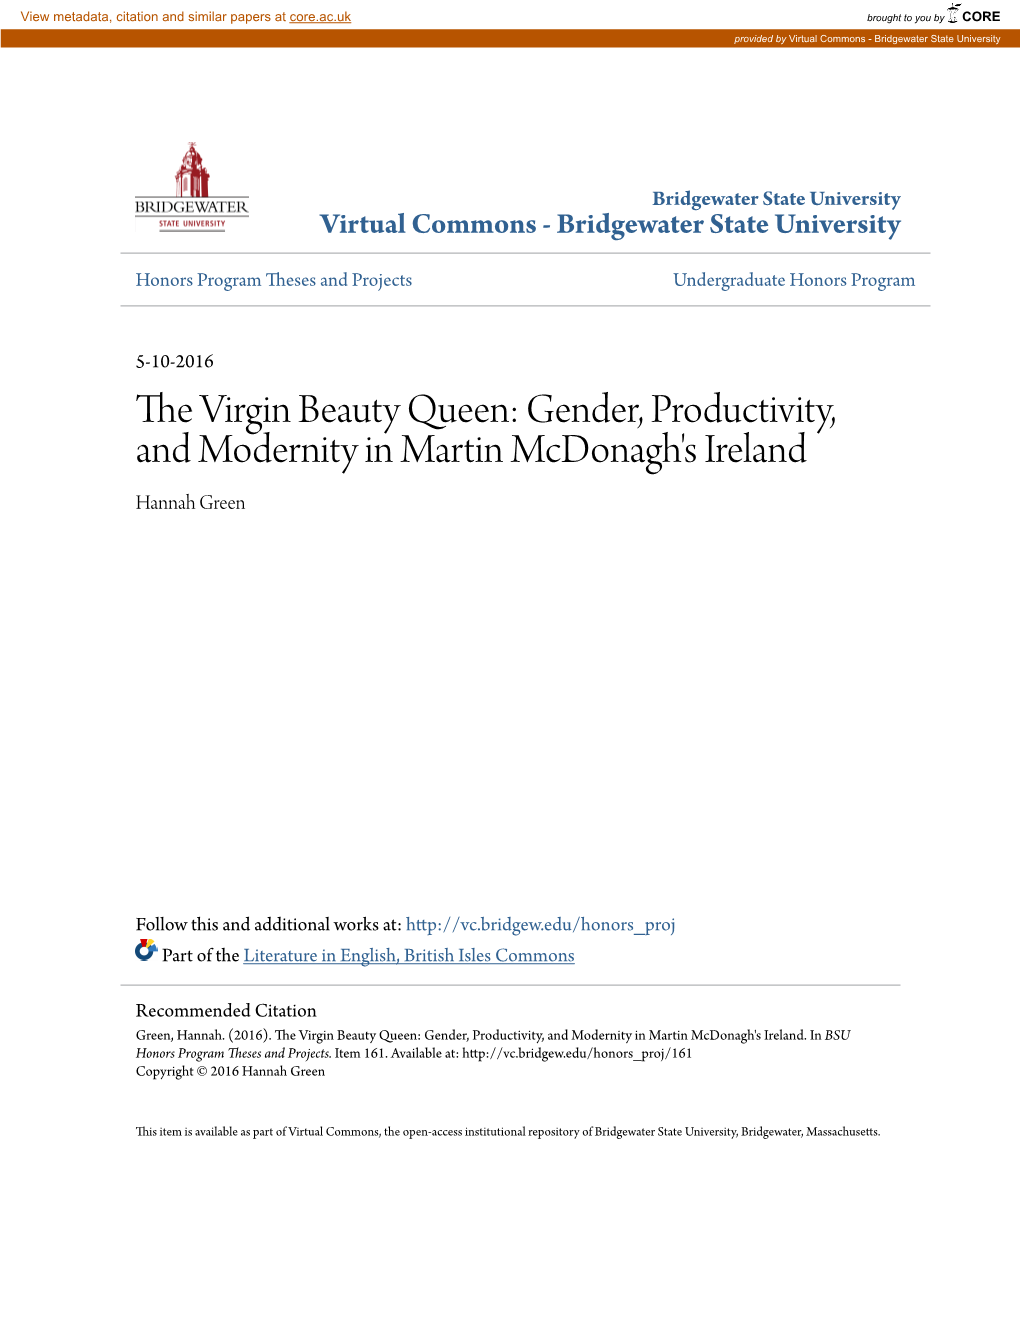 Gender, Productivity, and Modernity in Martin Mcdonagh's Ireland Hannah Green